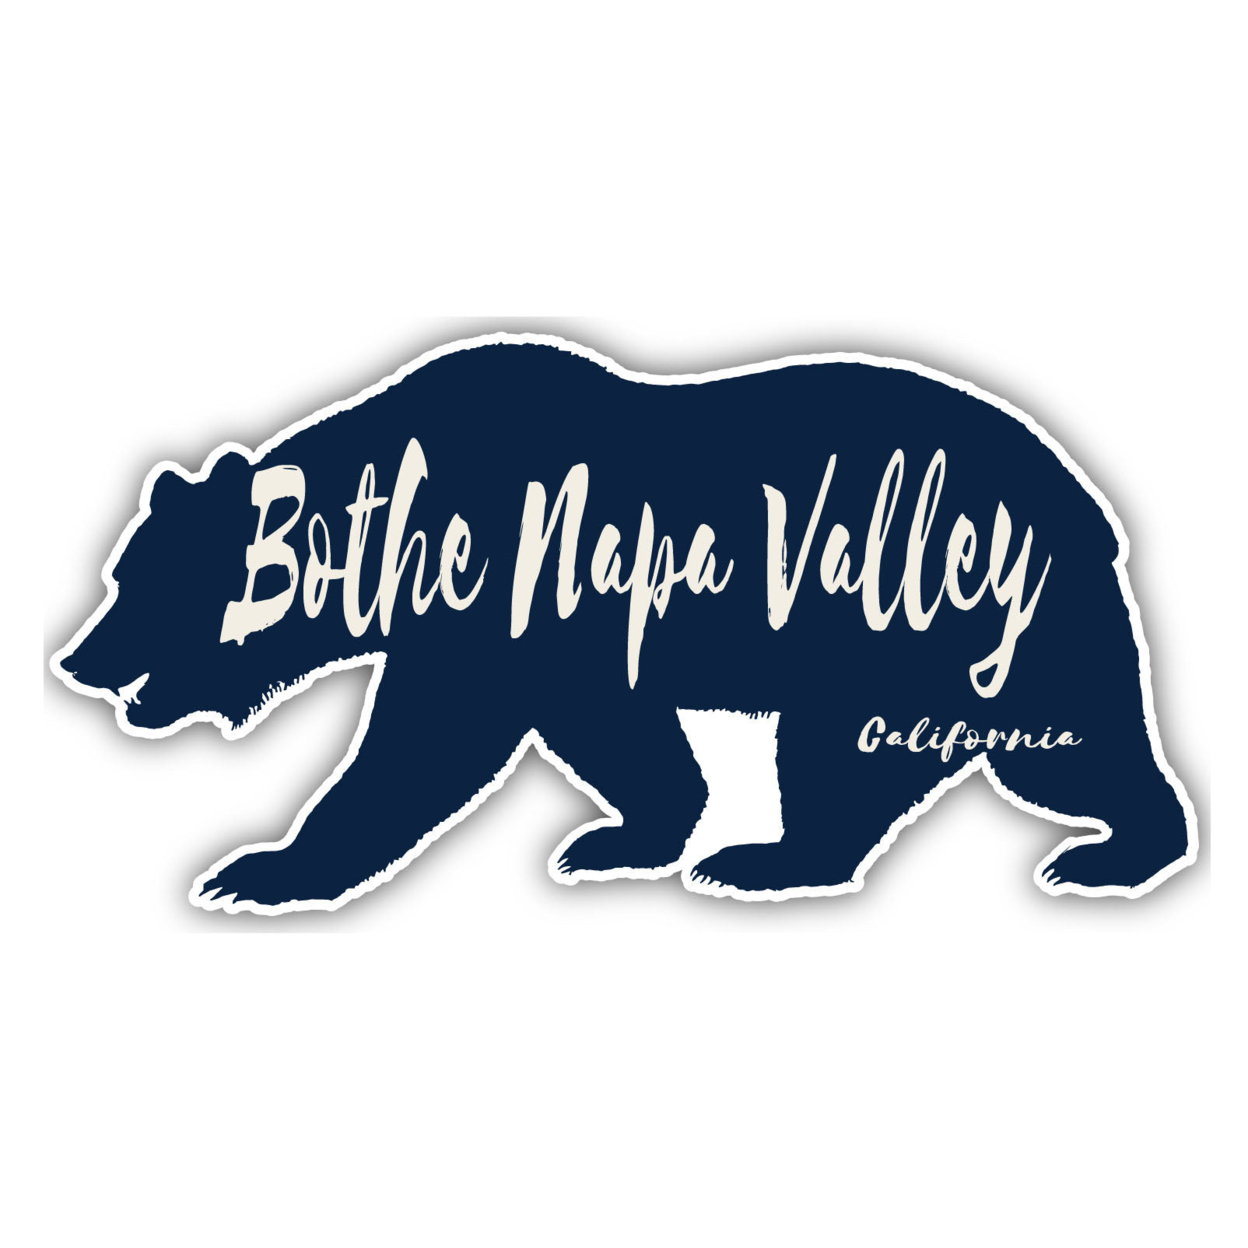 Bothe Napa Valley California Souvenir Decorative Stickers (Choose Theme And Size) - Single Unit, 6-Inch, Bear